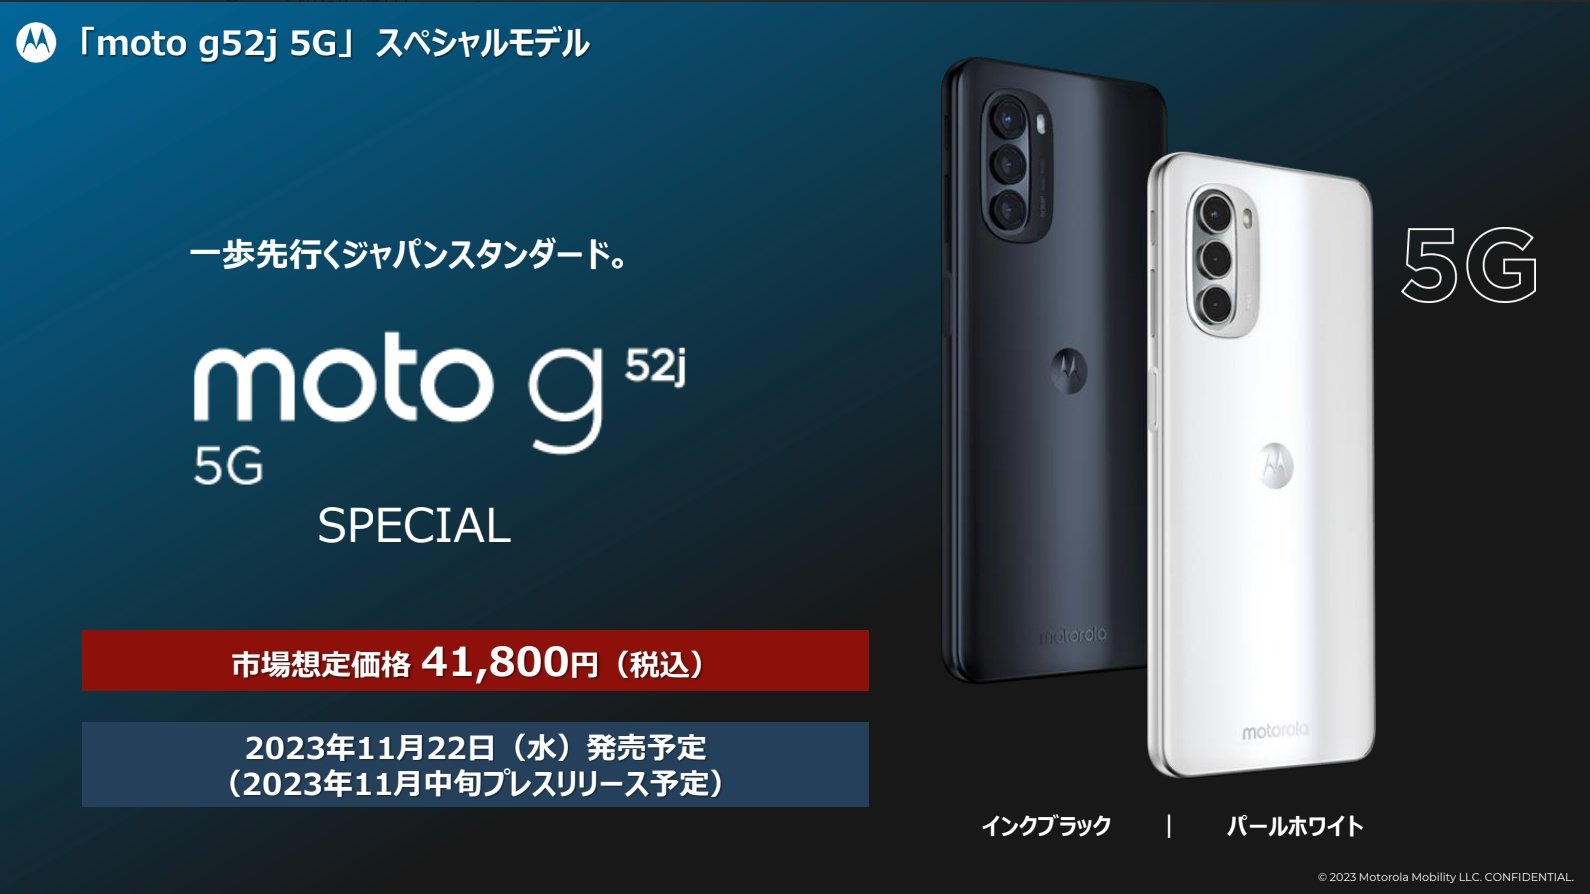 moto g52j 5G SPECIAL」発表 ストレージを256GBに増量 4万1800円で11月